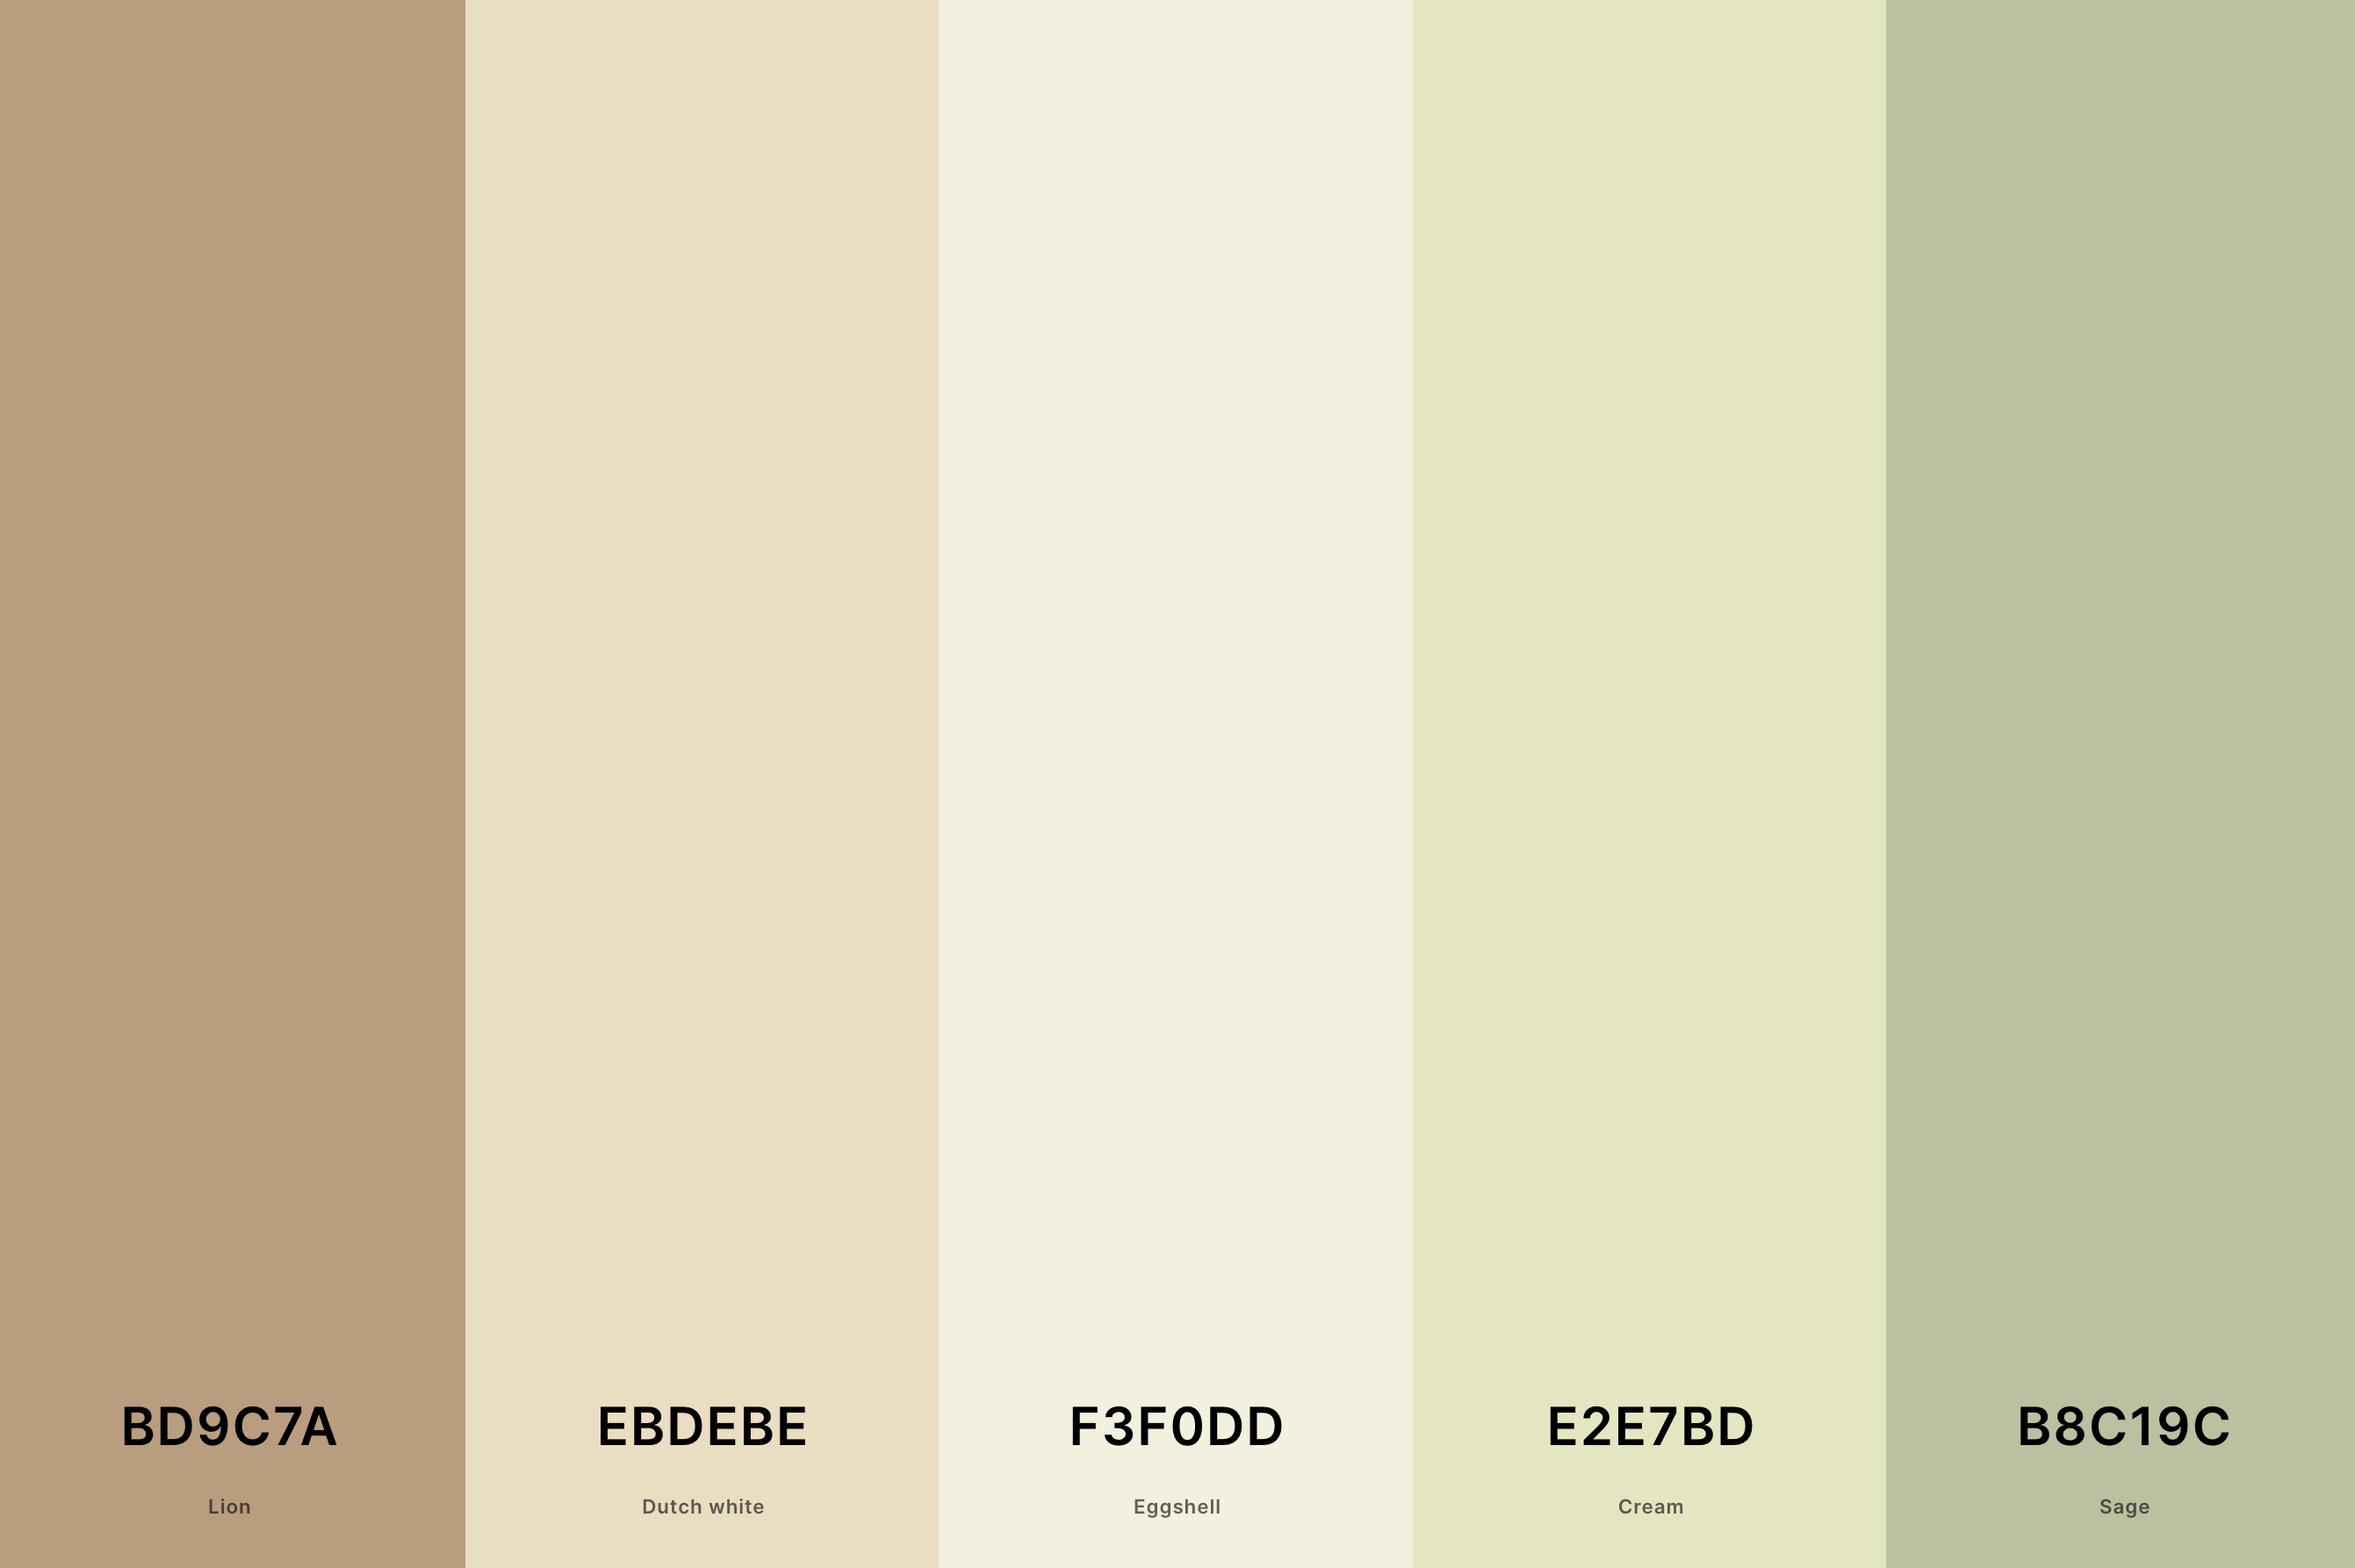 23. Pastel Earth Tone Color Palette Color Palette with Lion (Hex #BD9C7A) + Dutch White (Hex #EBDEBE) + Eggshell (Hex #F3F0DD) + Cream (Hex #E2E7BD) + Sage (Hex #B8C19C) Color Palette with Hex Codes